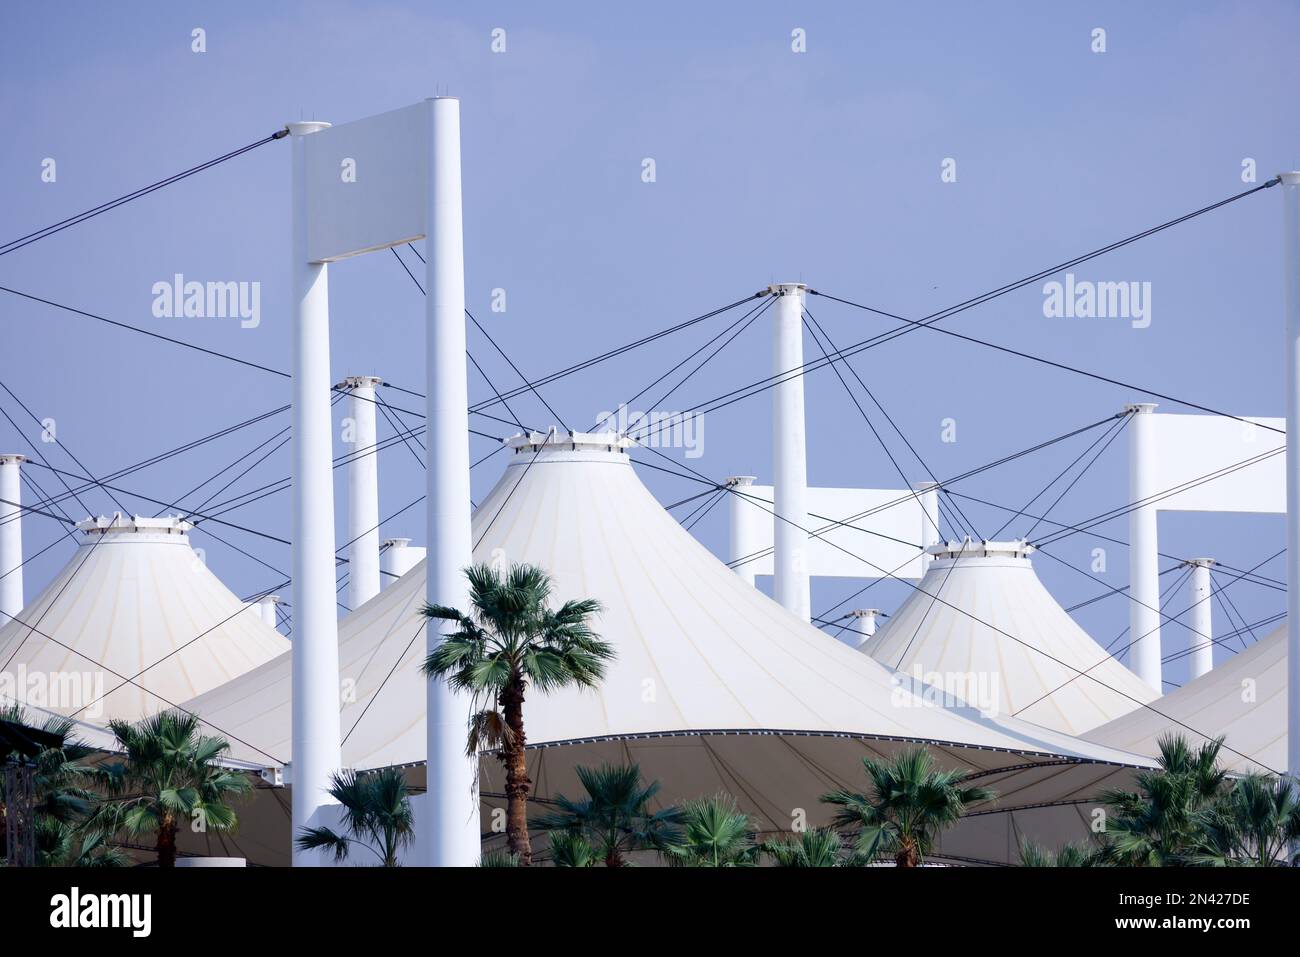 Hajj Terminal of King Abdulaziz International Airport, Jeddah, Saudi Arabia Stock Photo